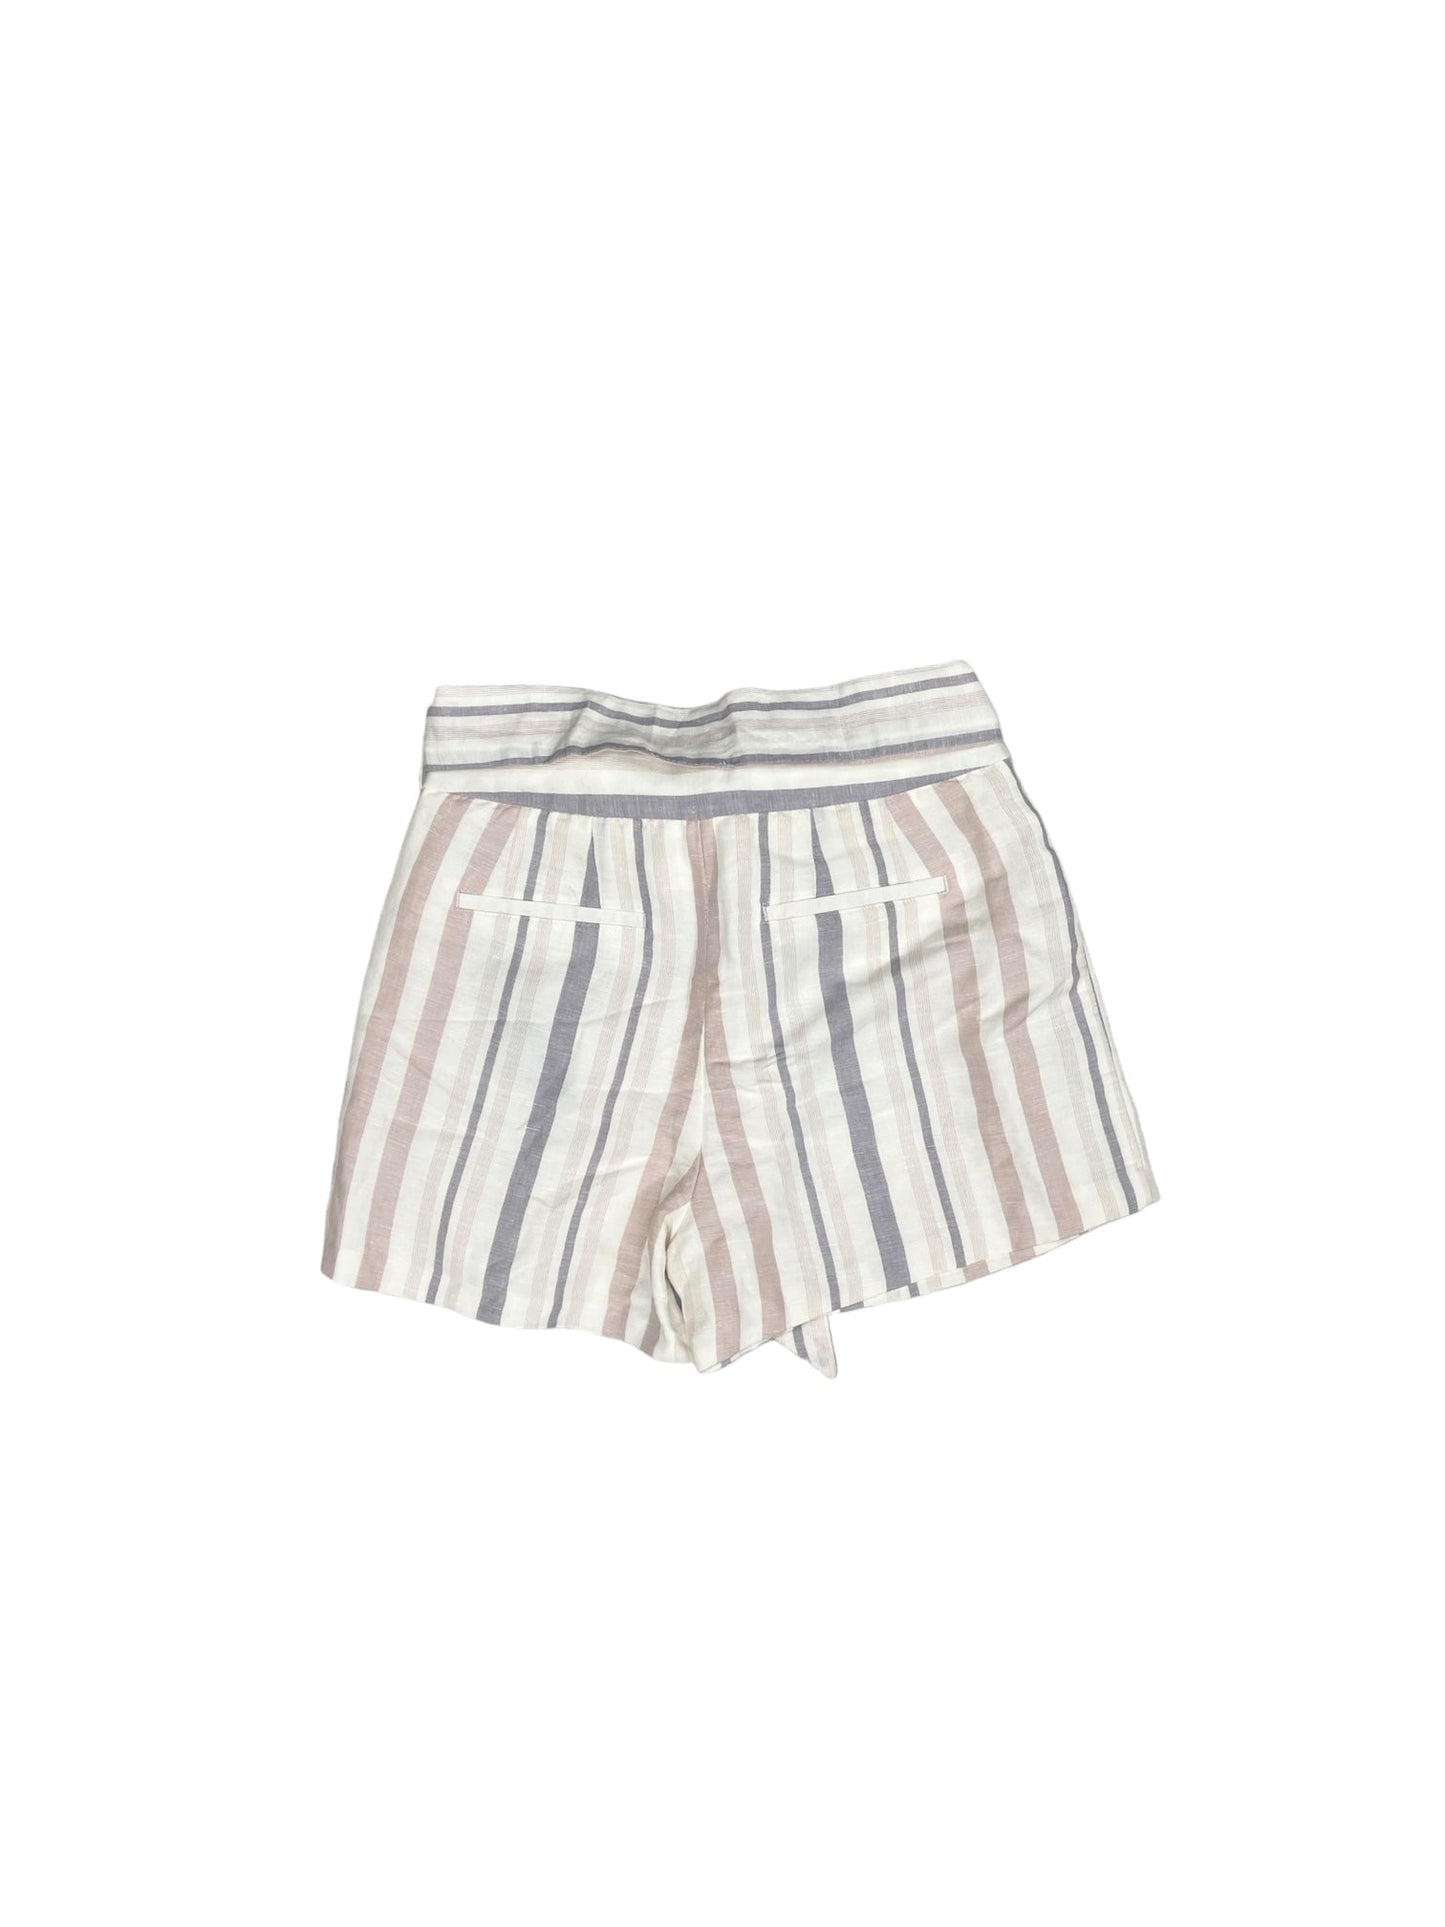 Striped Pattern Shorts Express, Size 2